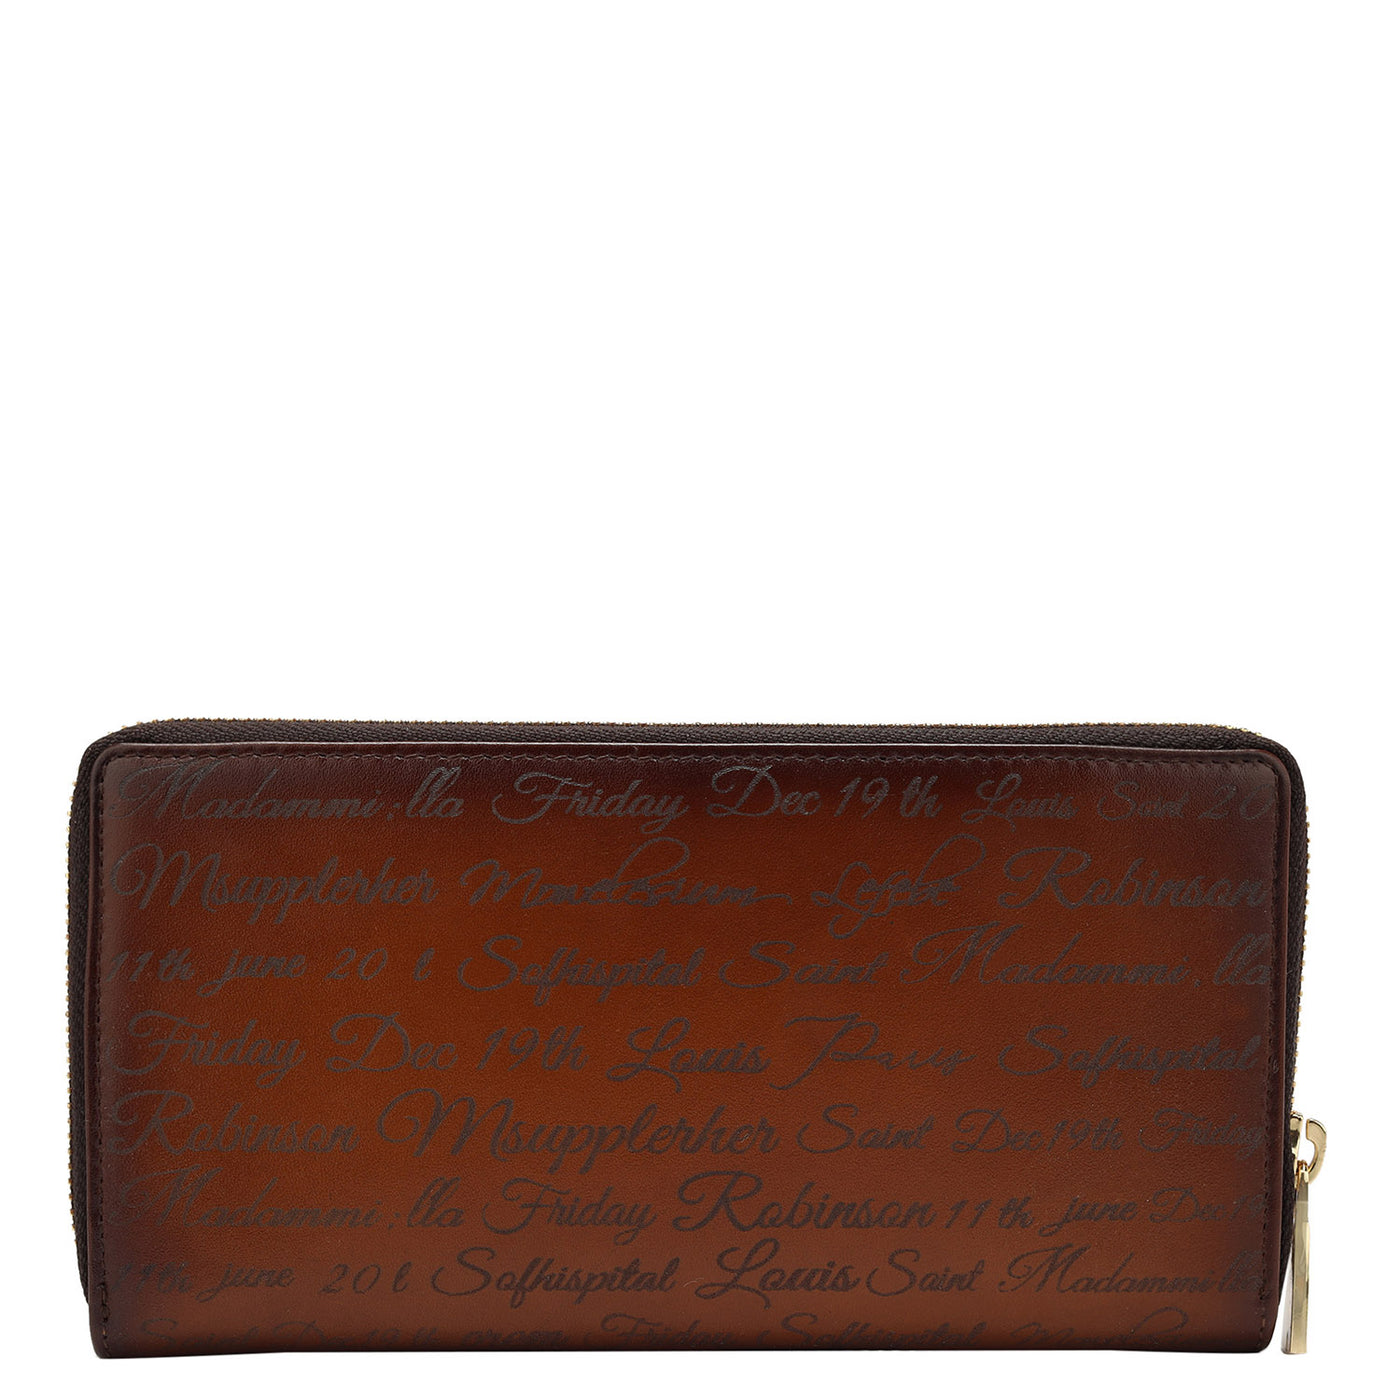 Signato Leather Ladies Wallet - Cognac